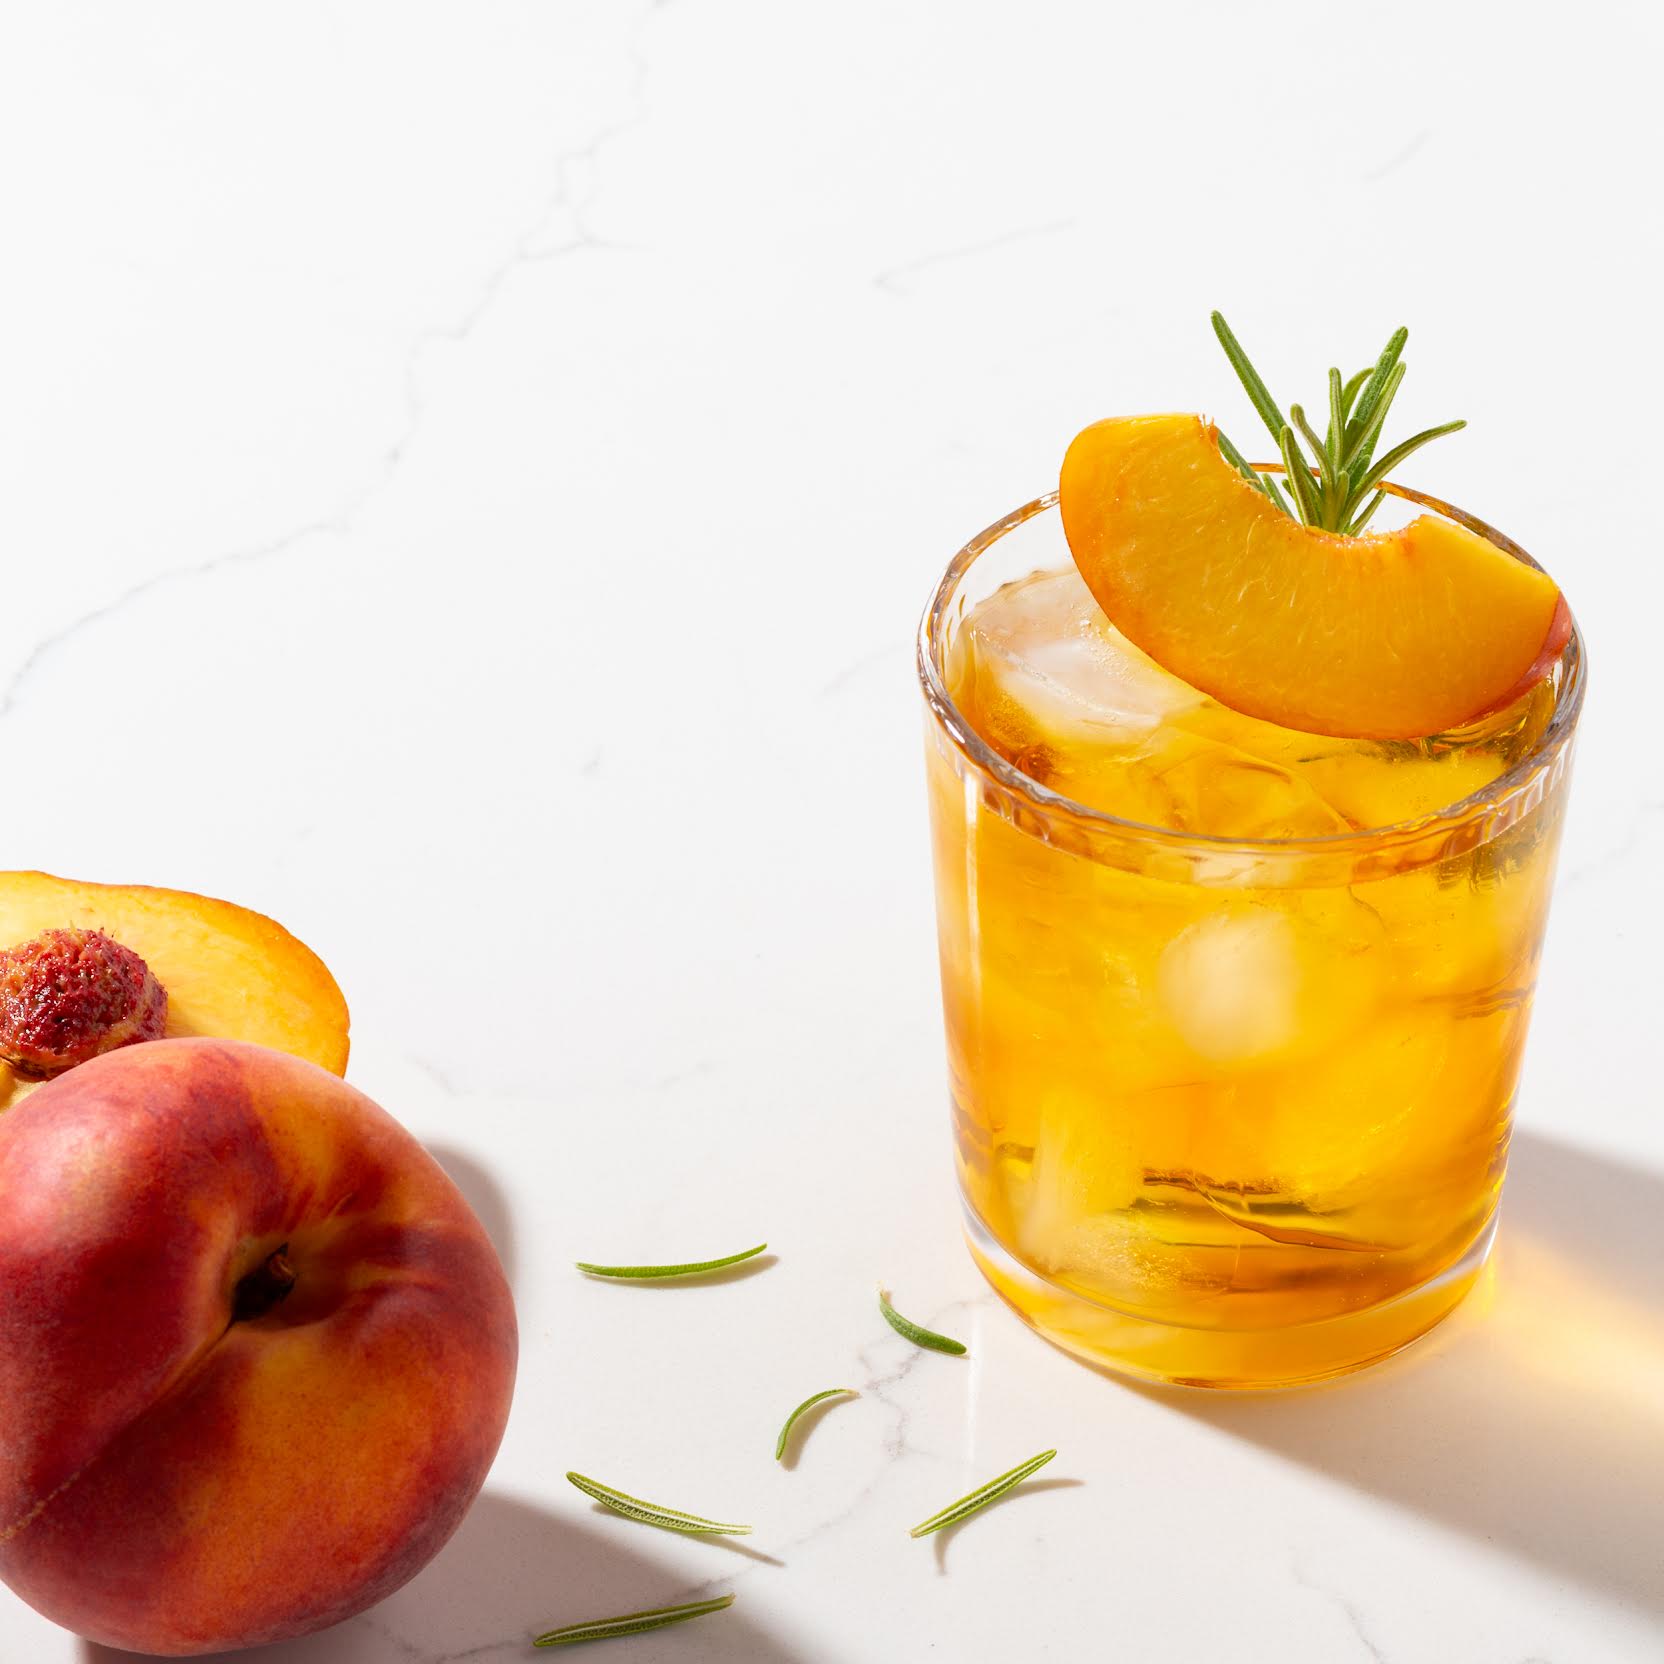 THEE Illustrious Peach Herbal Tea